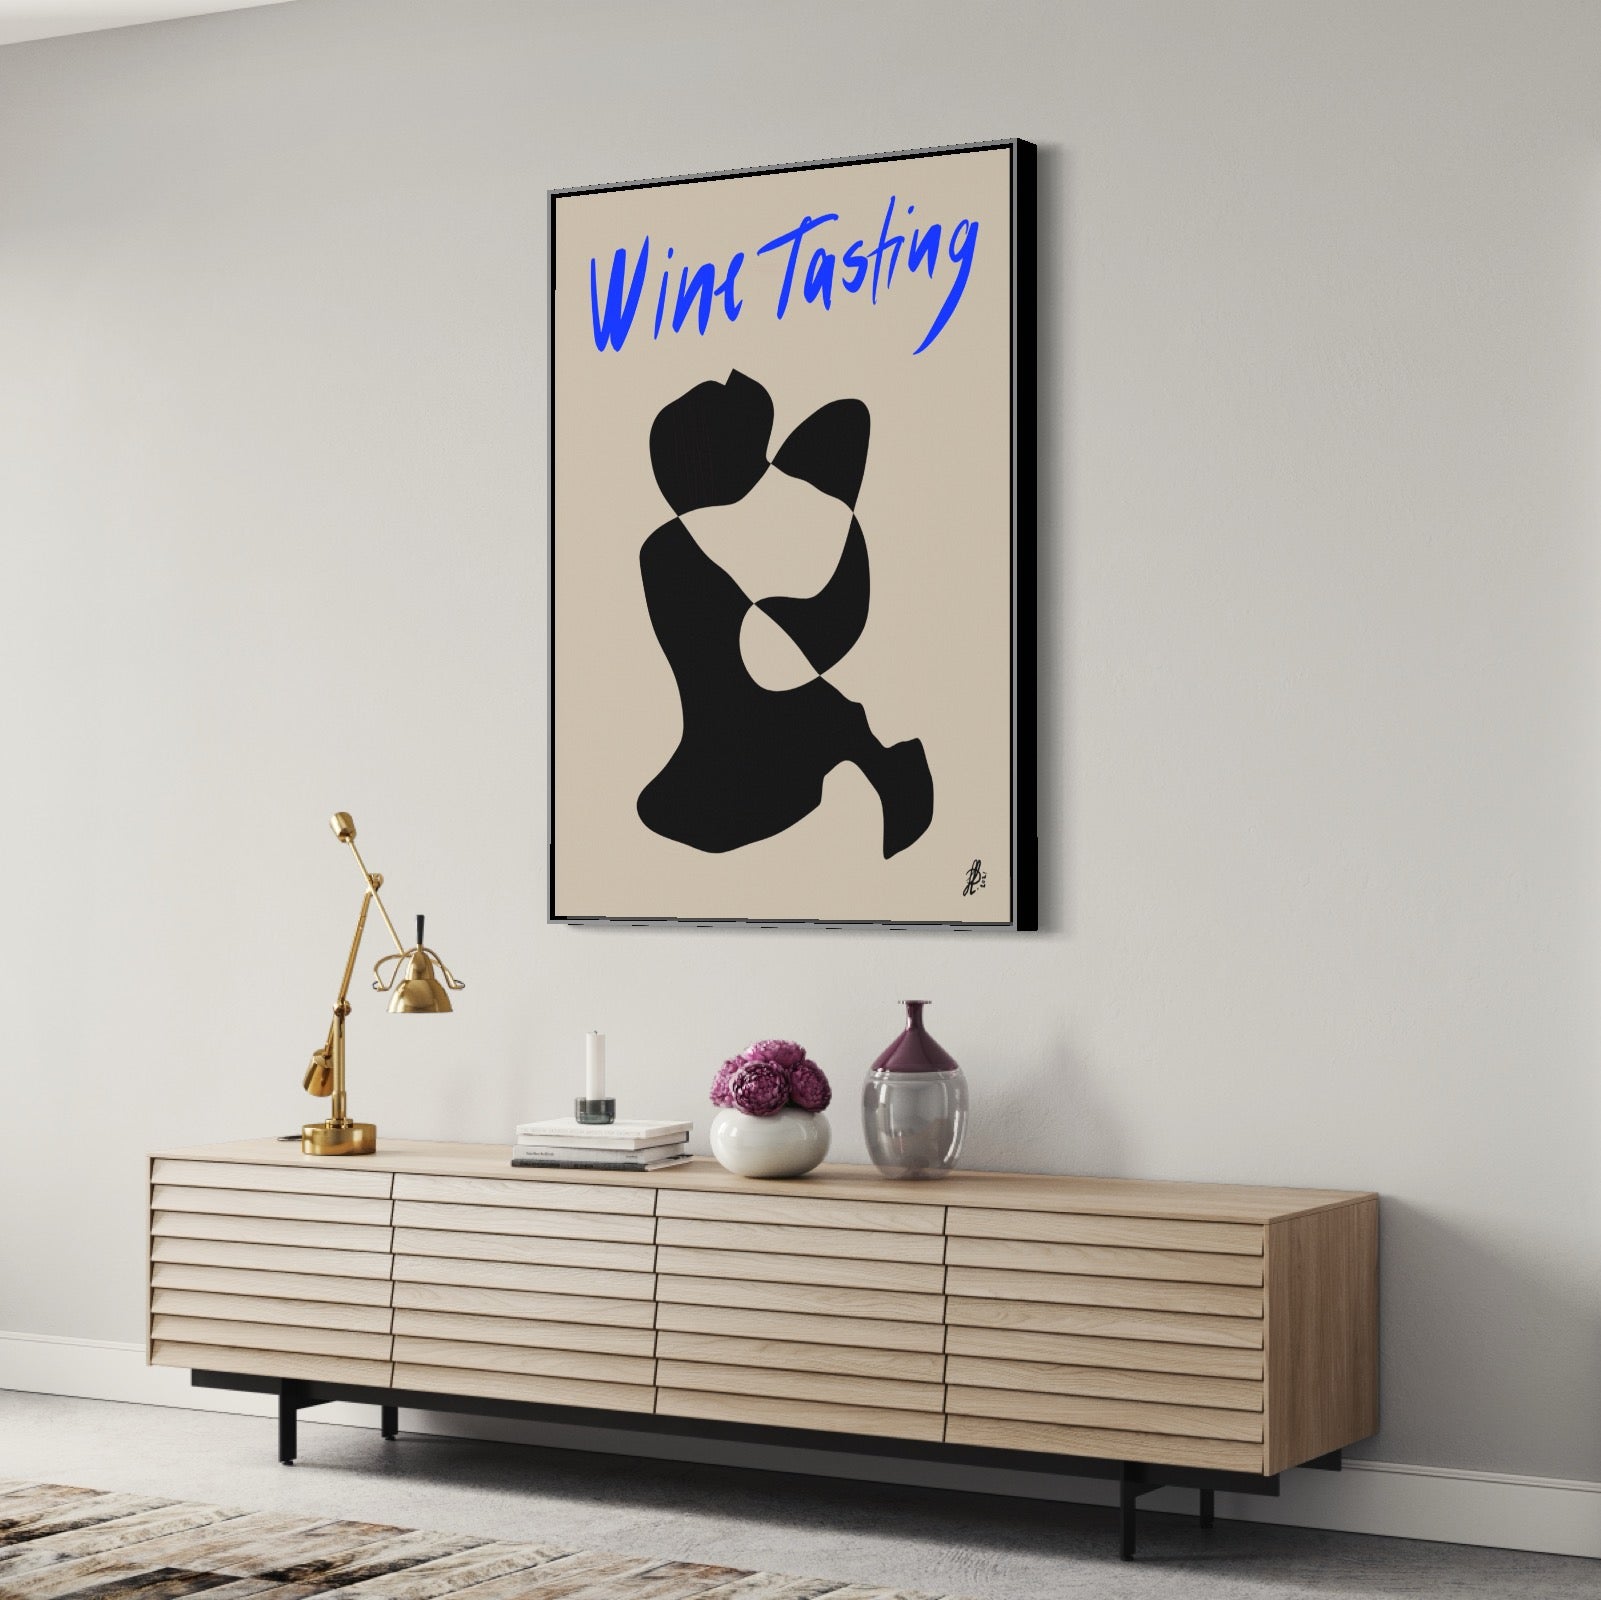 Poster: "Wine Tasting #1"